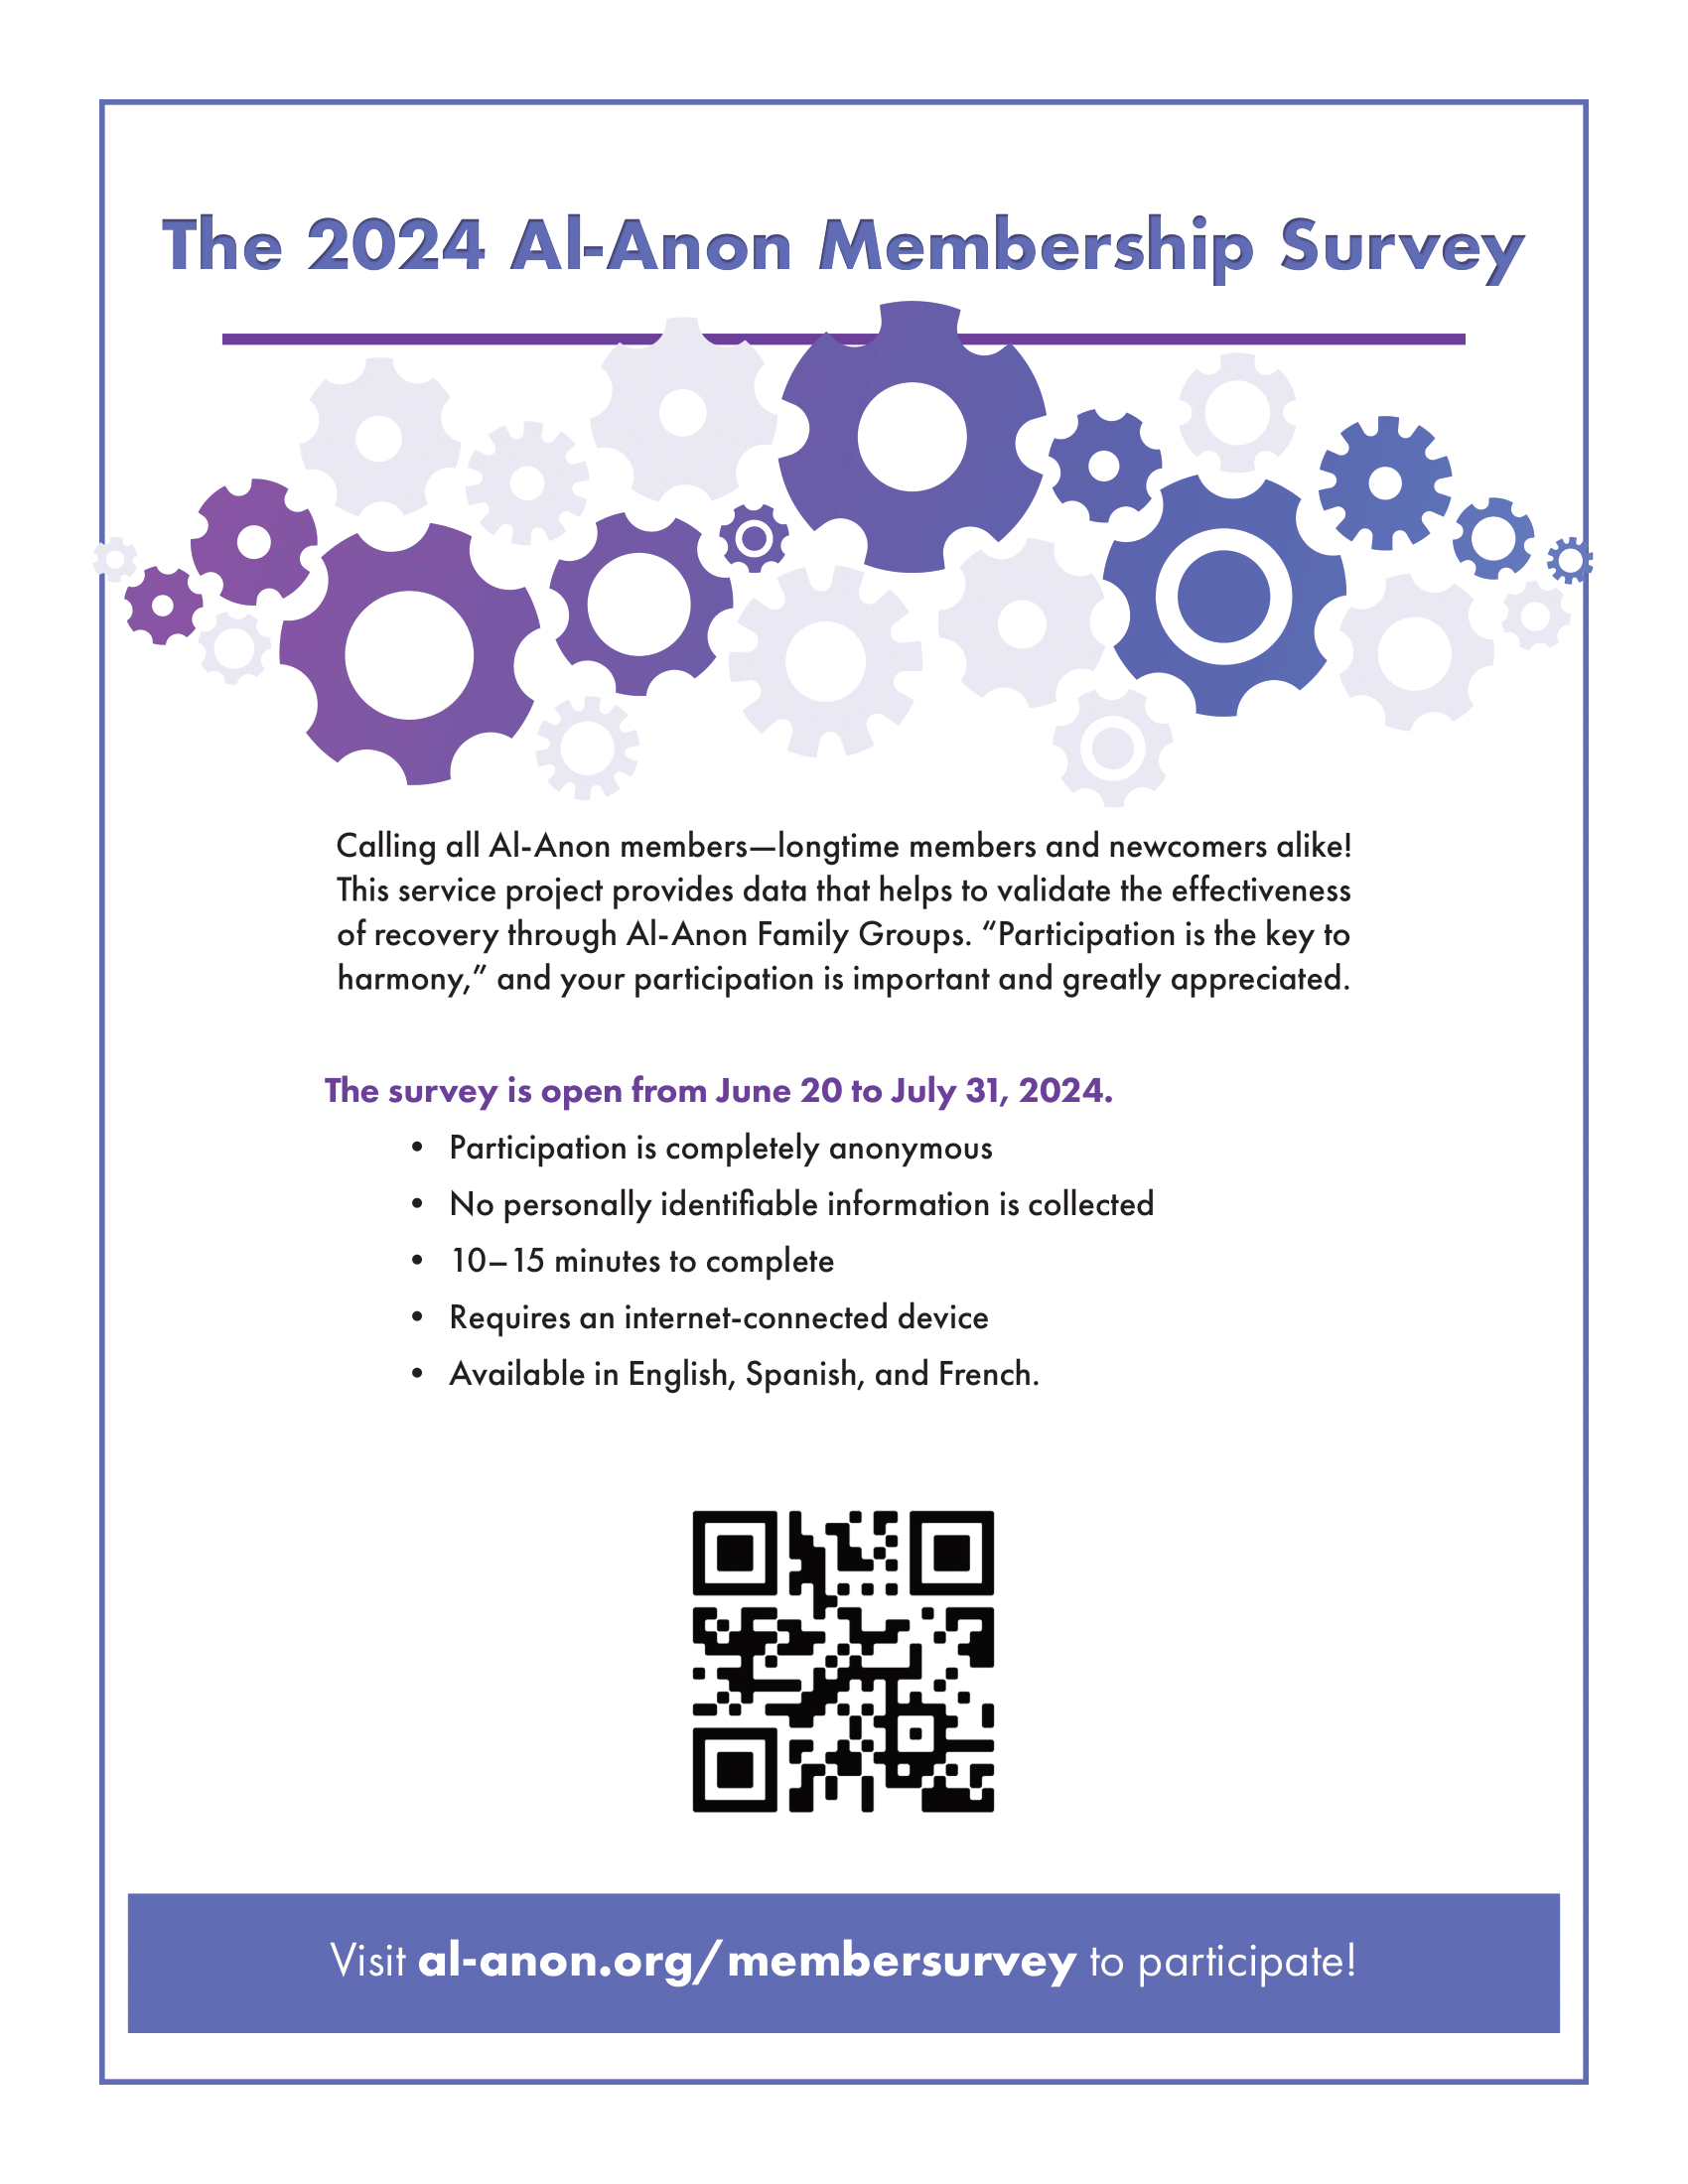 The flyer for 2024 Al-Anon Membership Survey